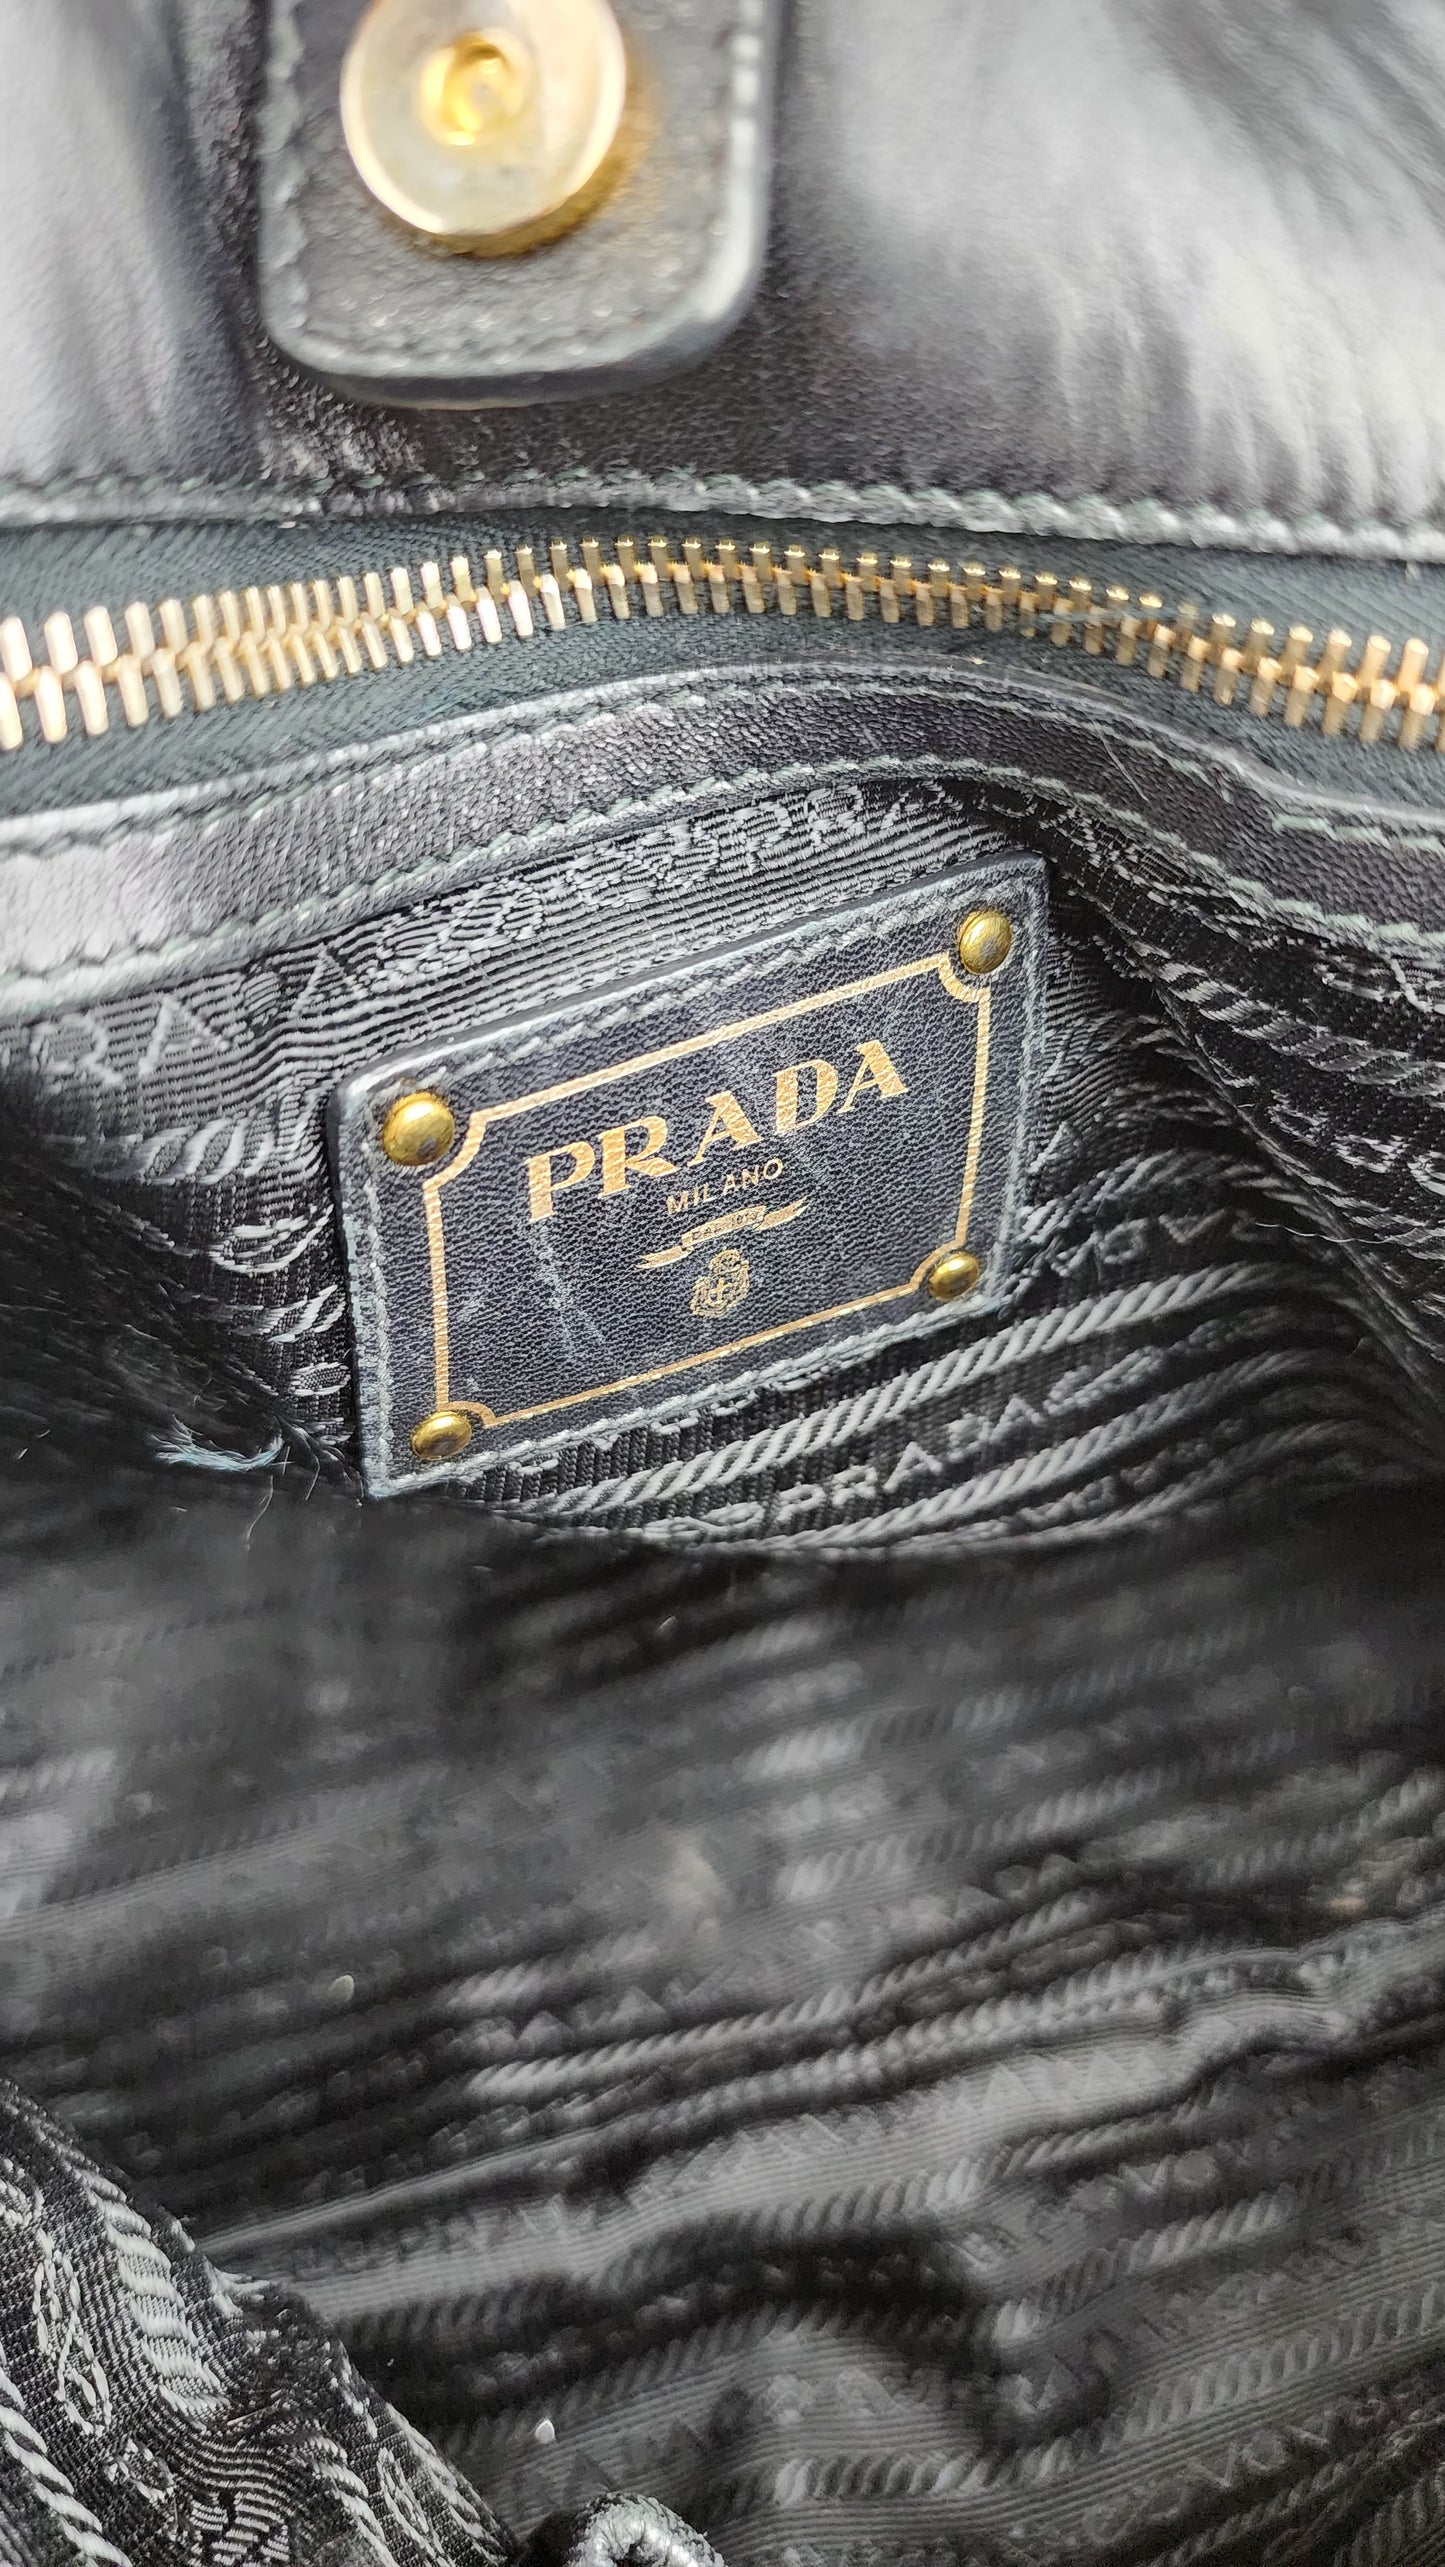 Prada Black Leather Handbag with Long Strap